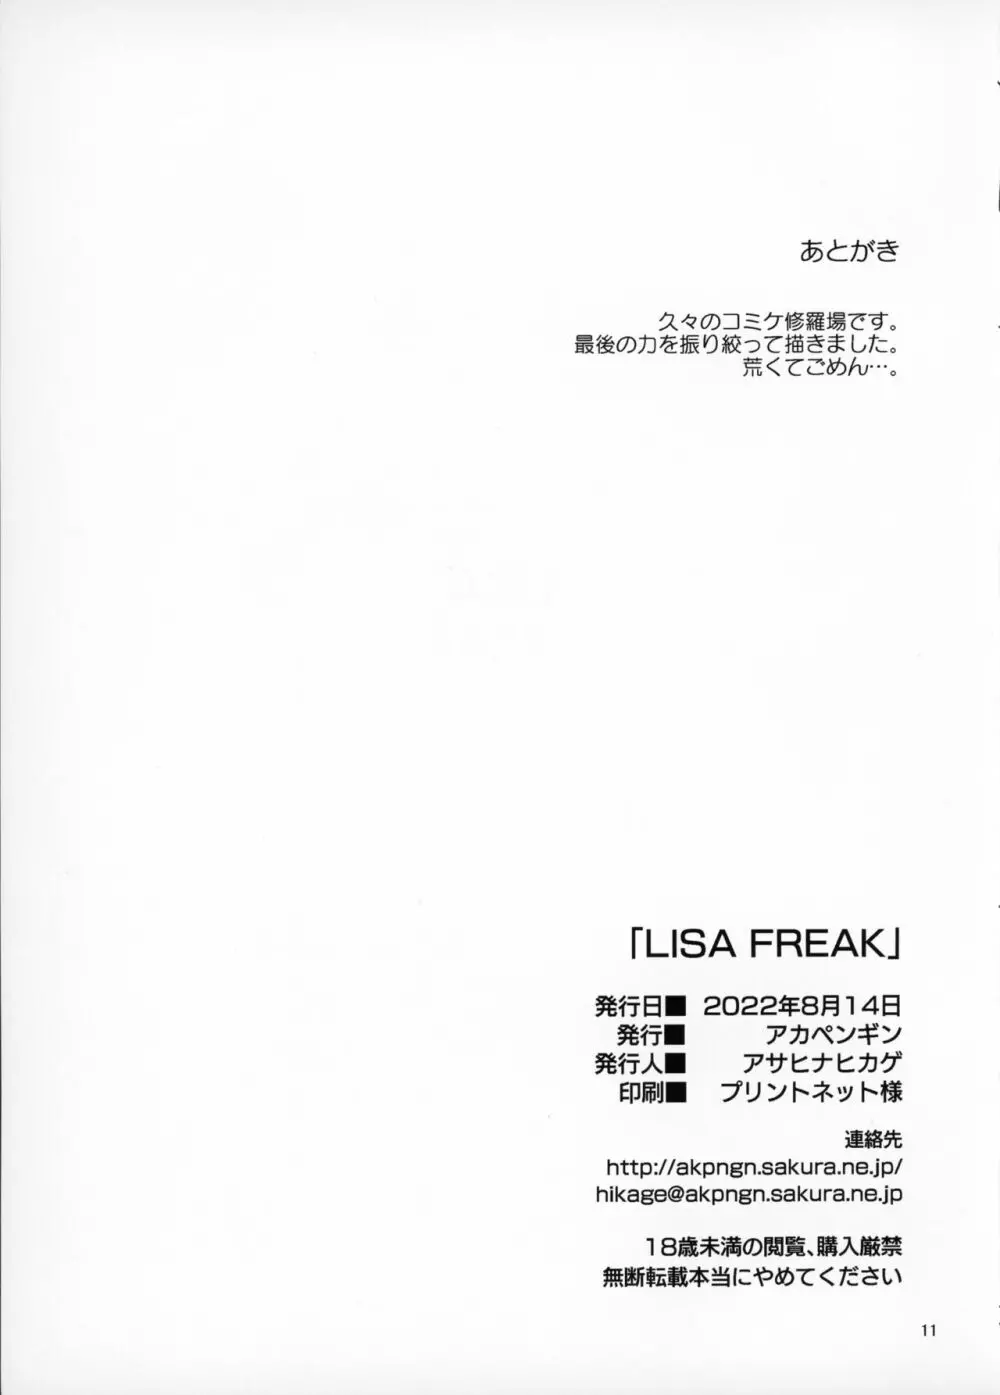 Lisa Freak 11ページ